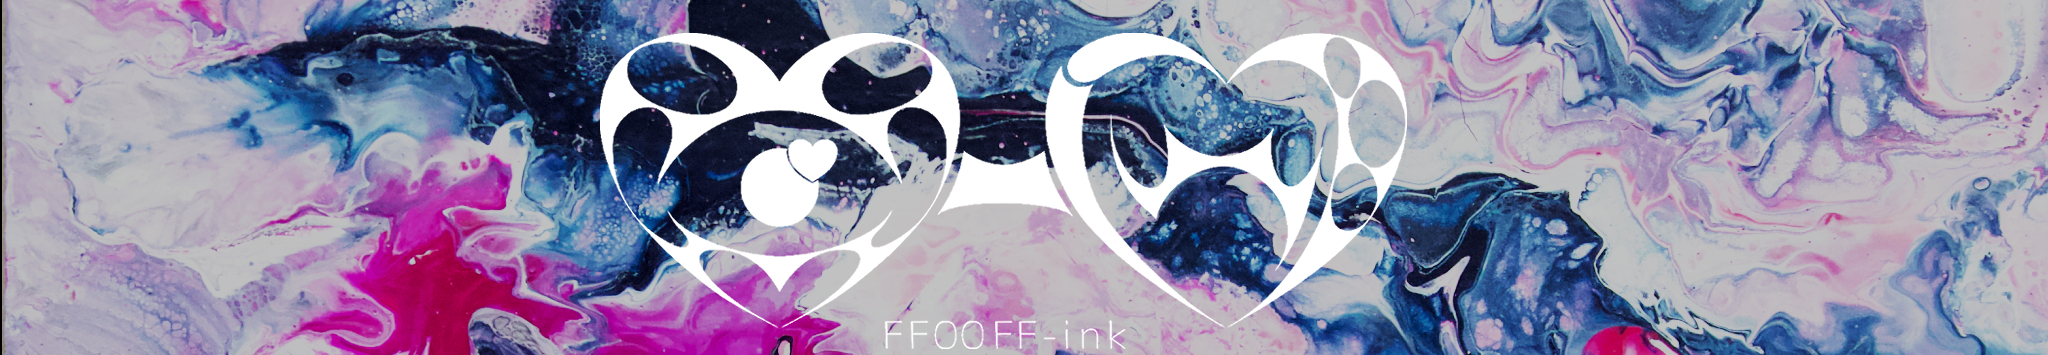 FF00FF-ink マゼンタインク 的個人檔案橫幅